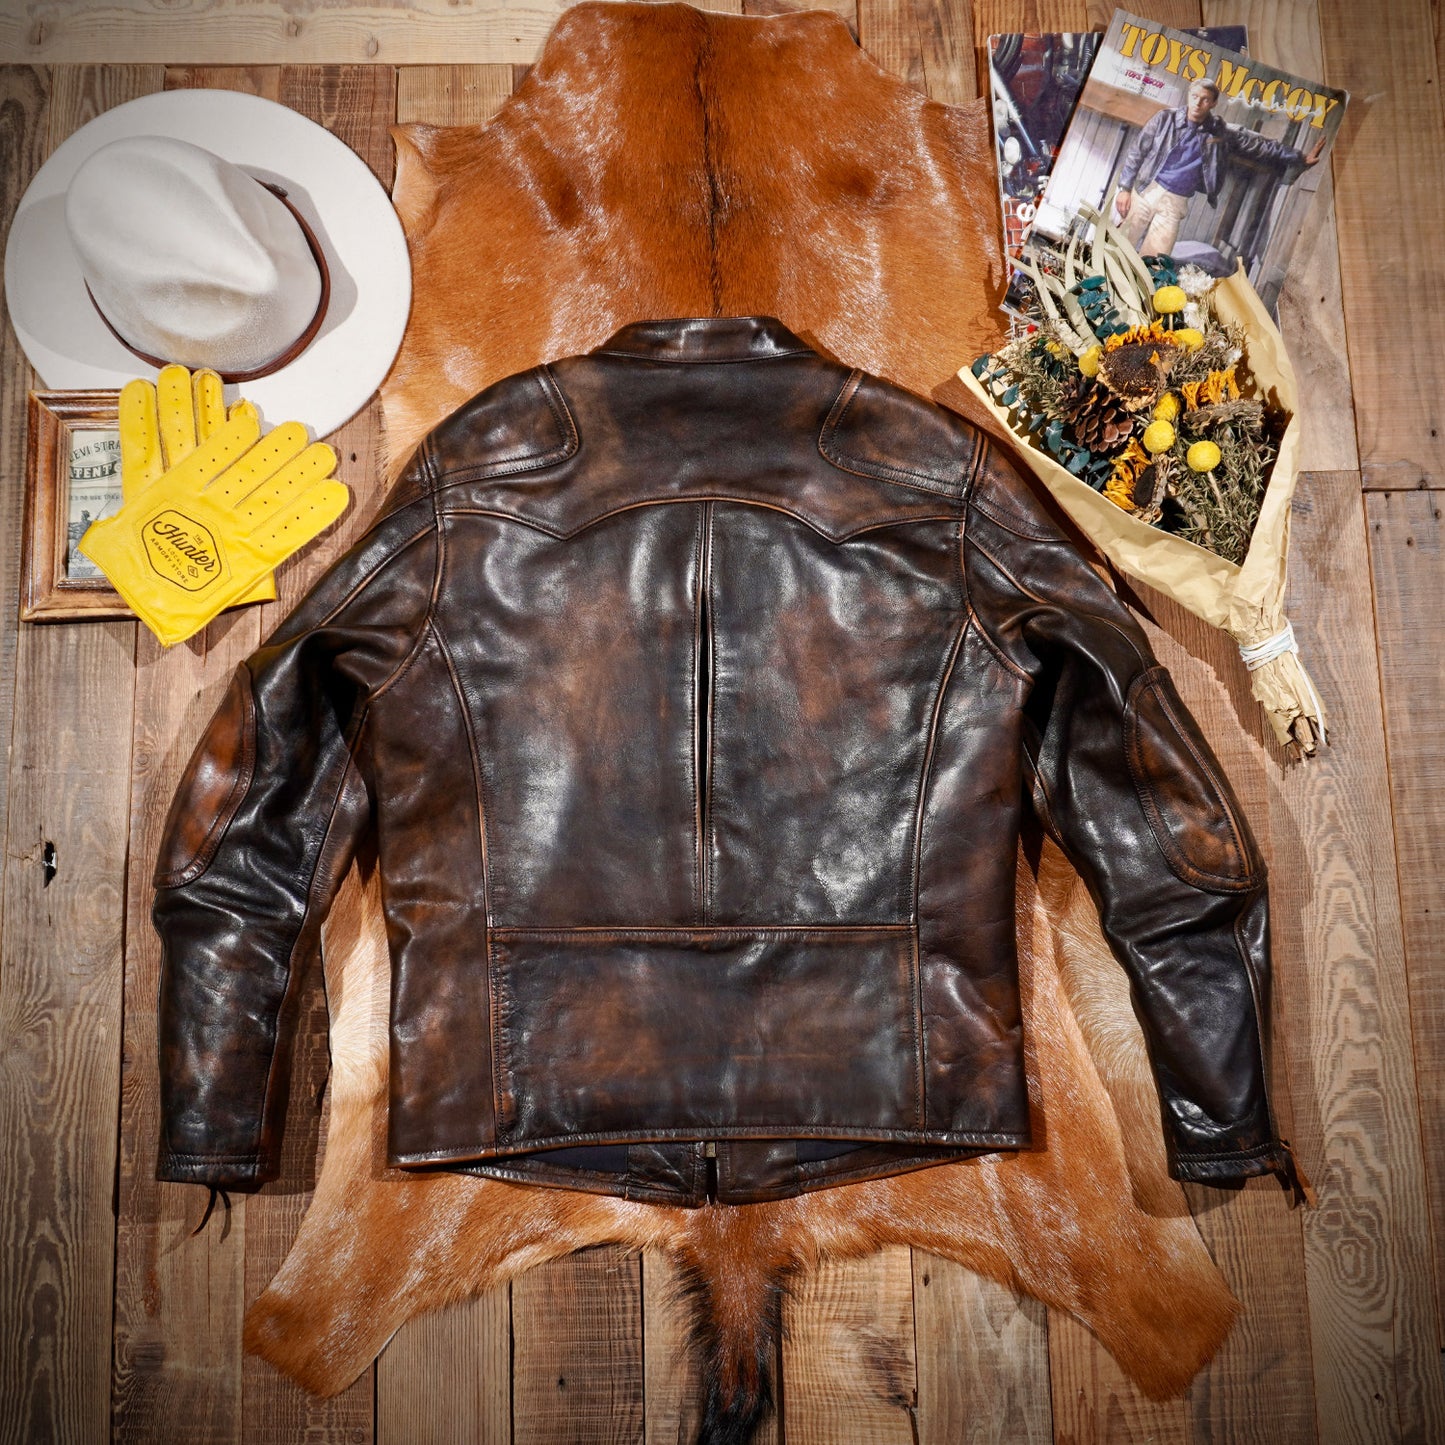 Men's Distressed Biker Leather Jacket